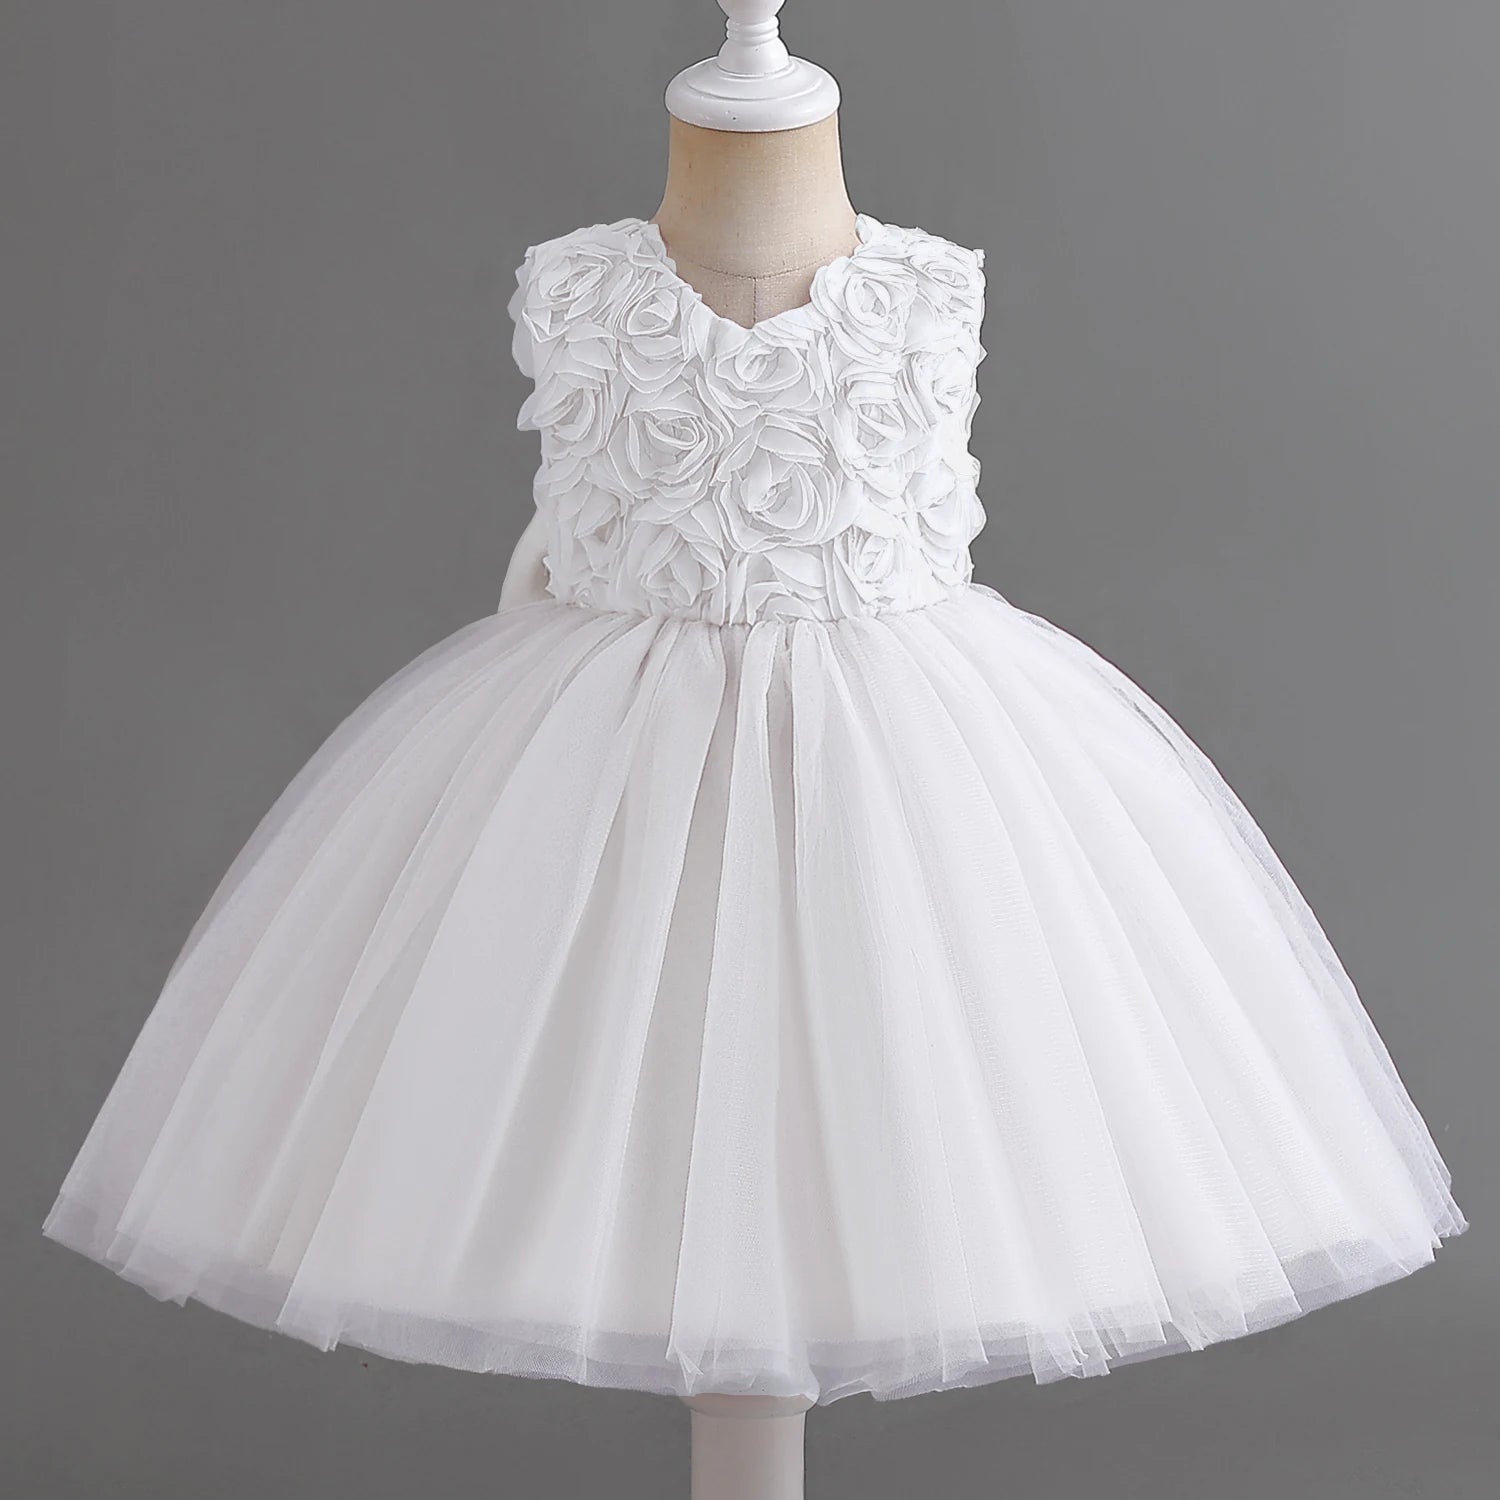 Princess Tulle Pink Flower Girl Dress for Wedding White by Baby Minaj Cruz